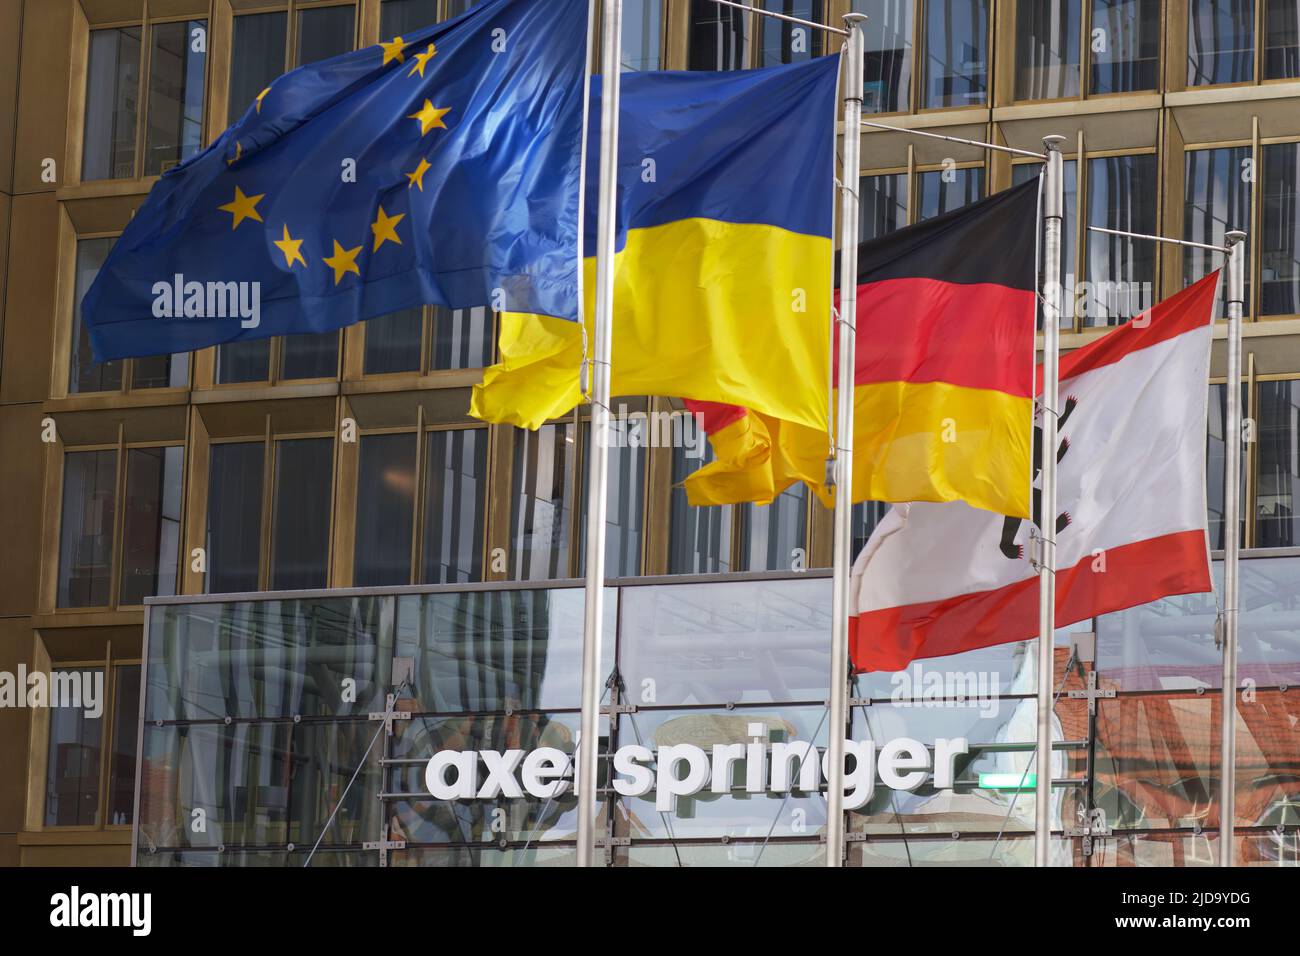 Ingresso casa editrice Axel Springer con quattro bandiere: UE, Ucraina, Germania, Berlino. Foto Stock